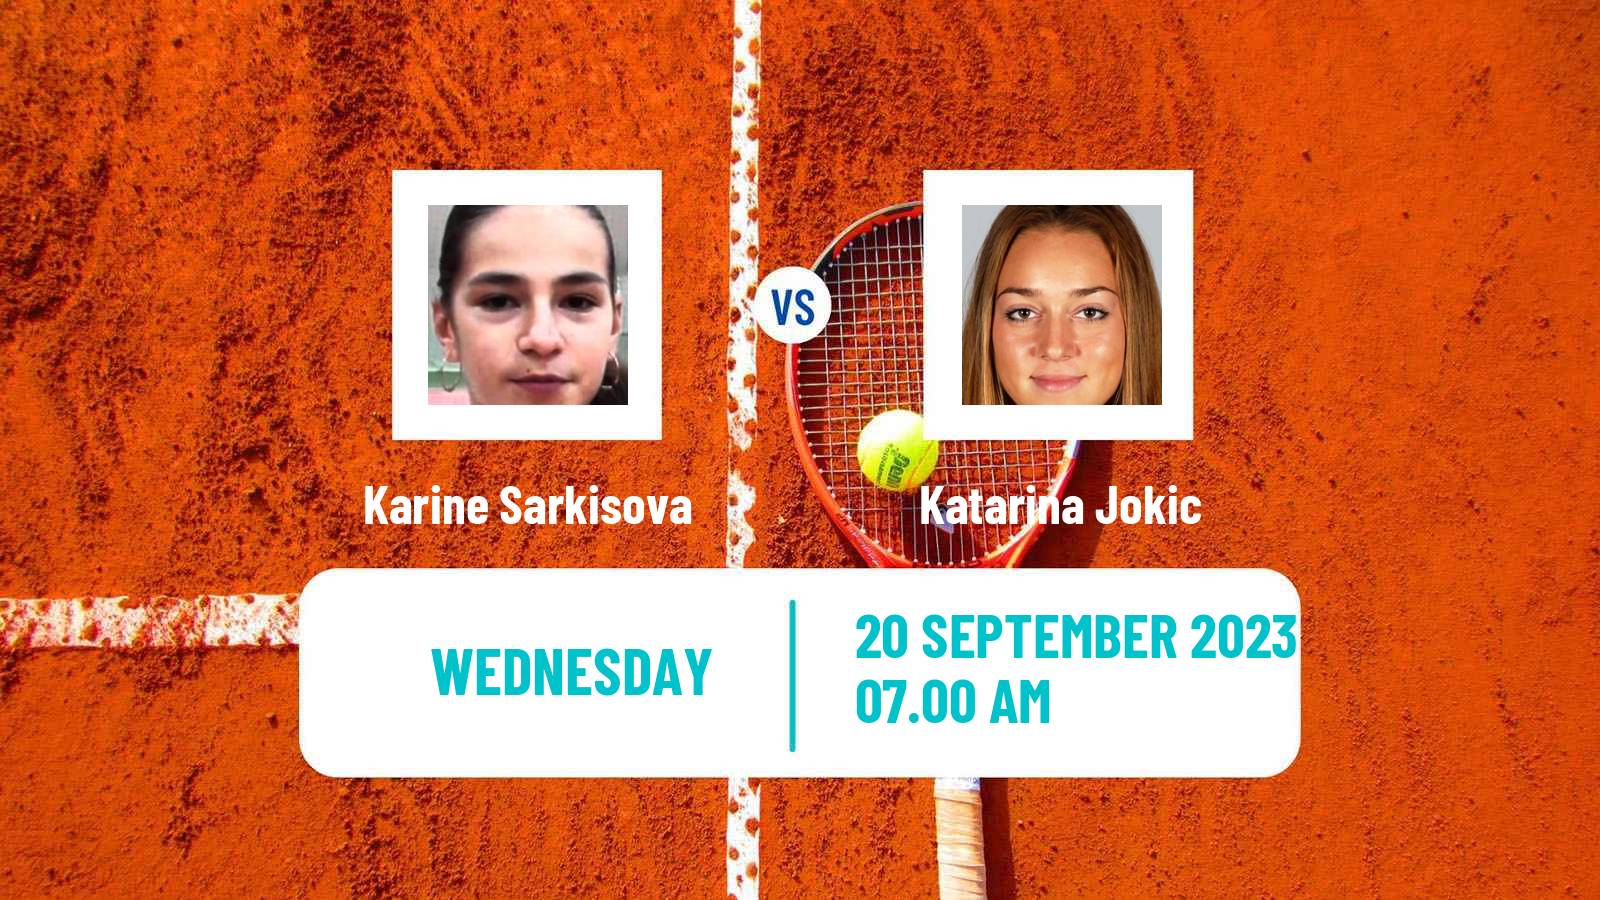 Tennis ITF W15 Kursumlijska Banja 11 Women Karine Sarkisova - Katarina Jokic